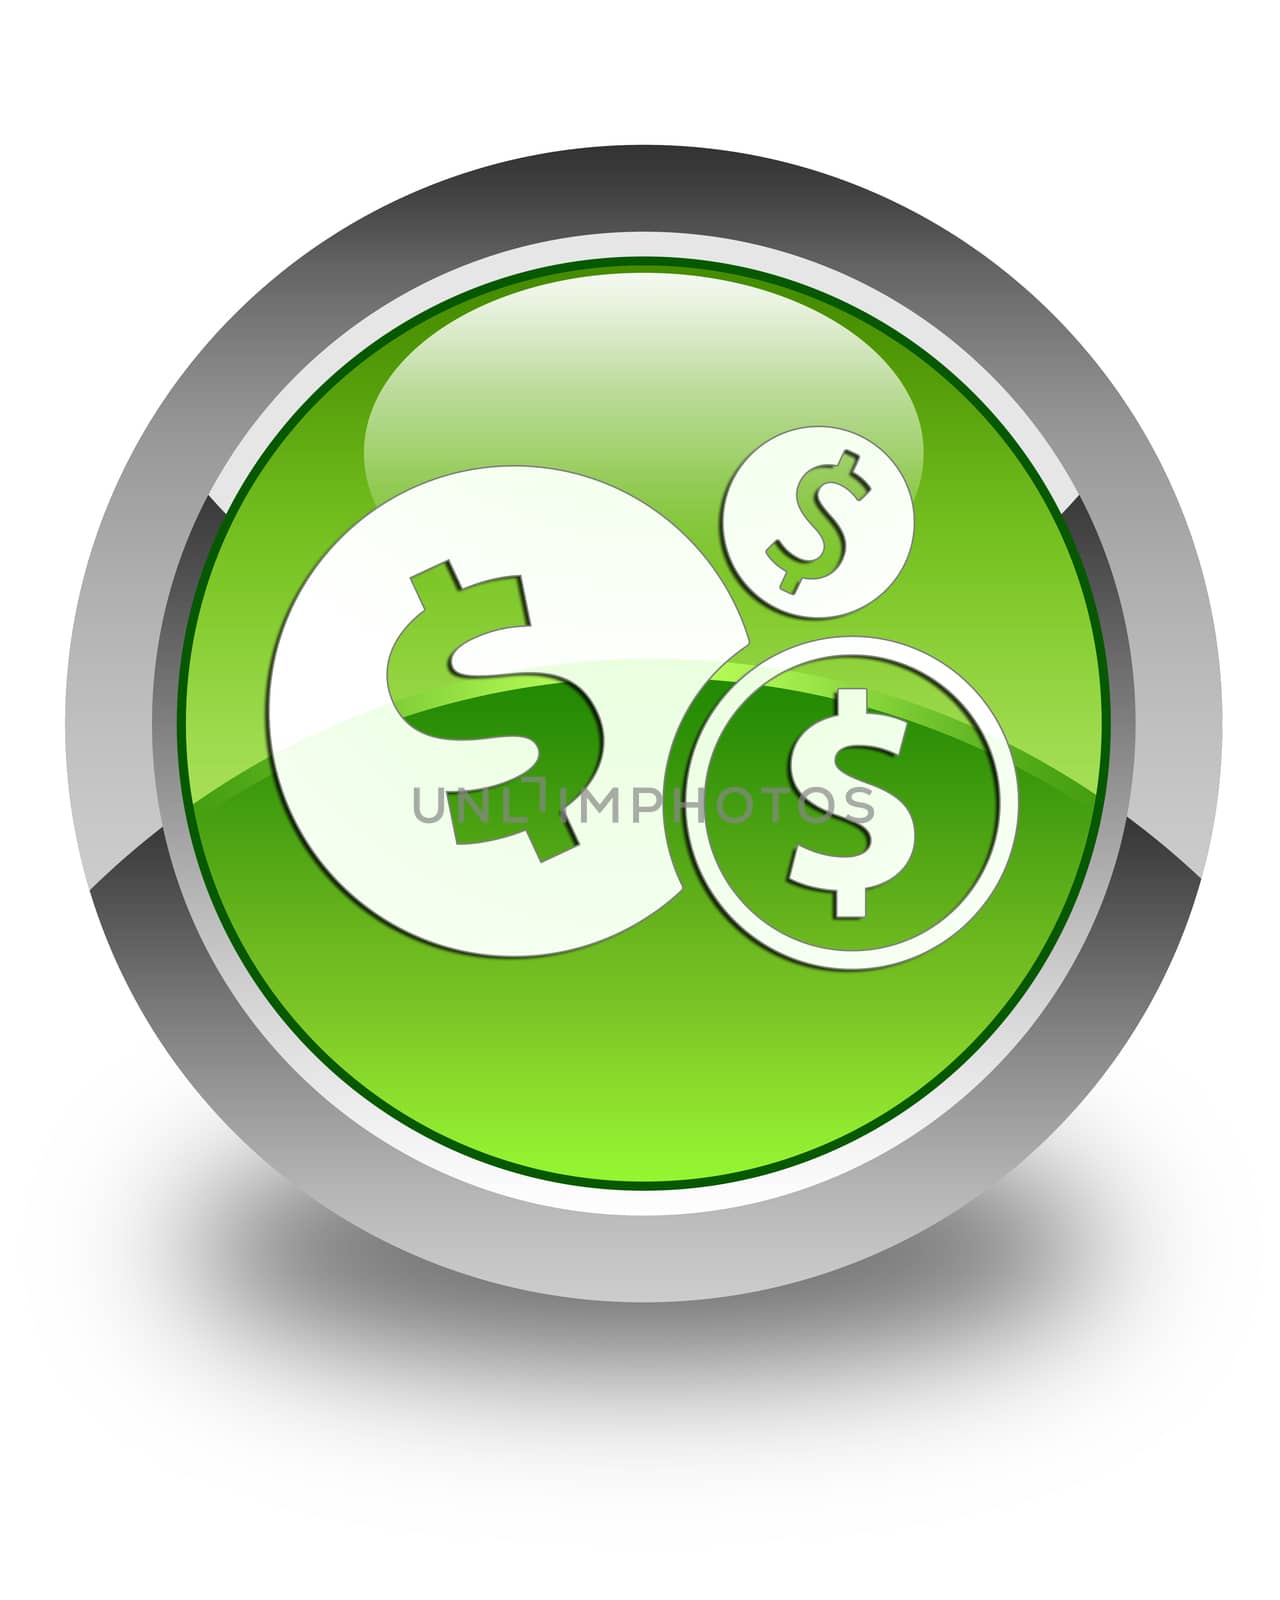 Finances (dollar sign) icon glossy green round button